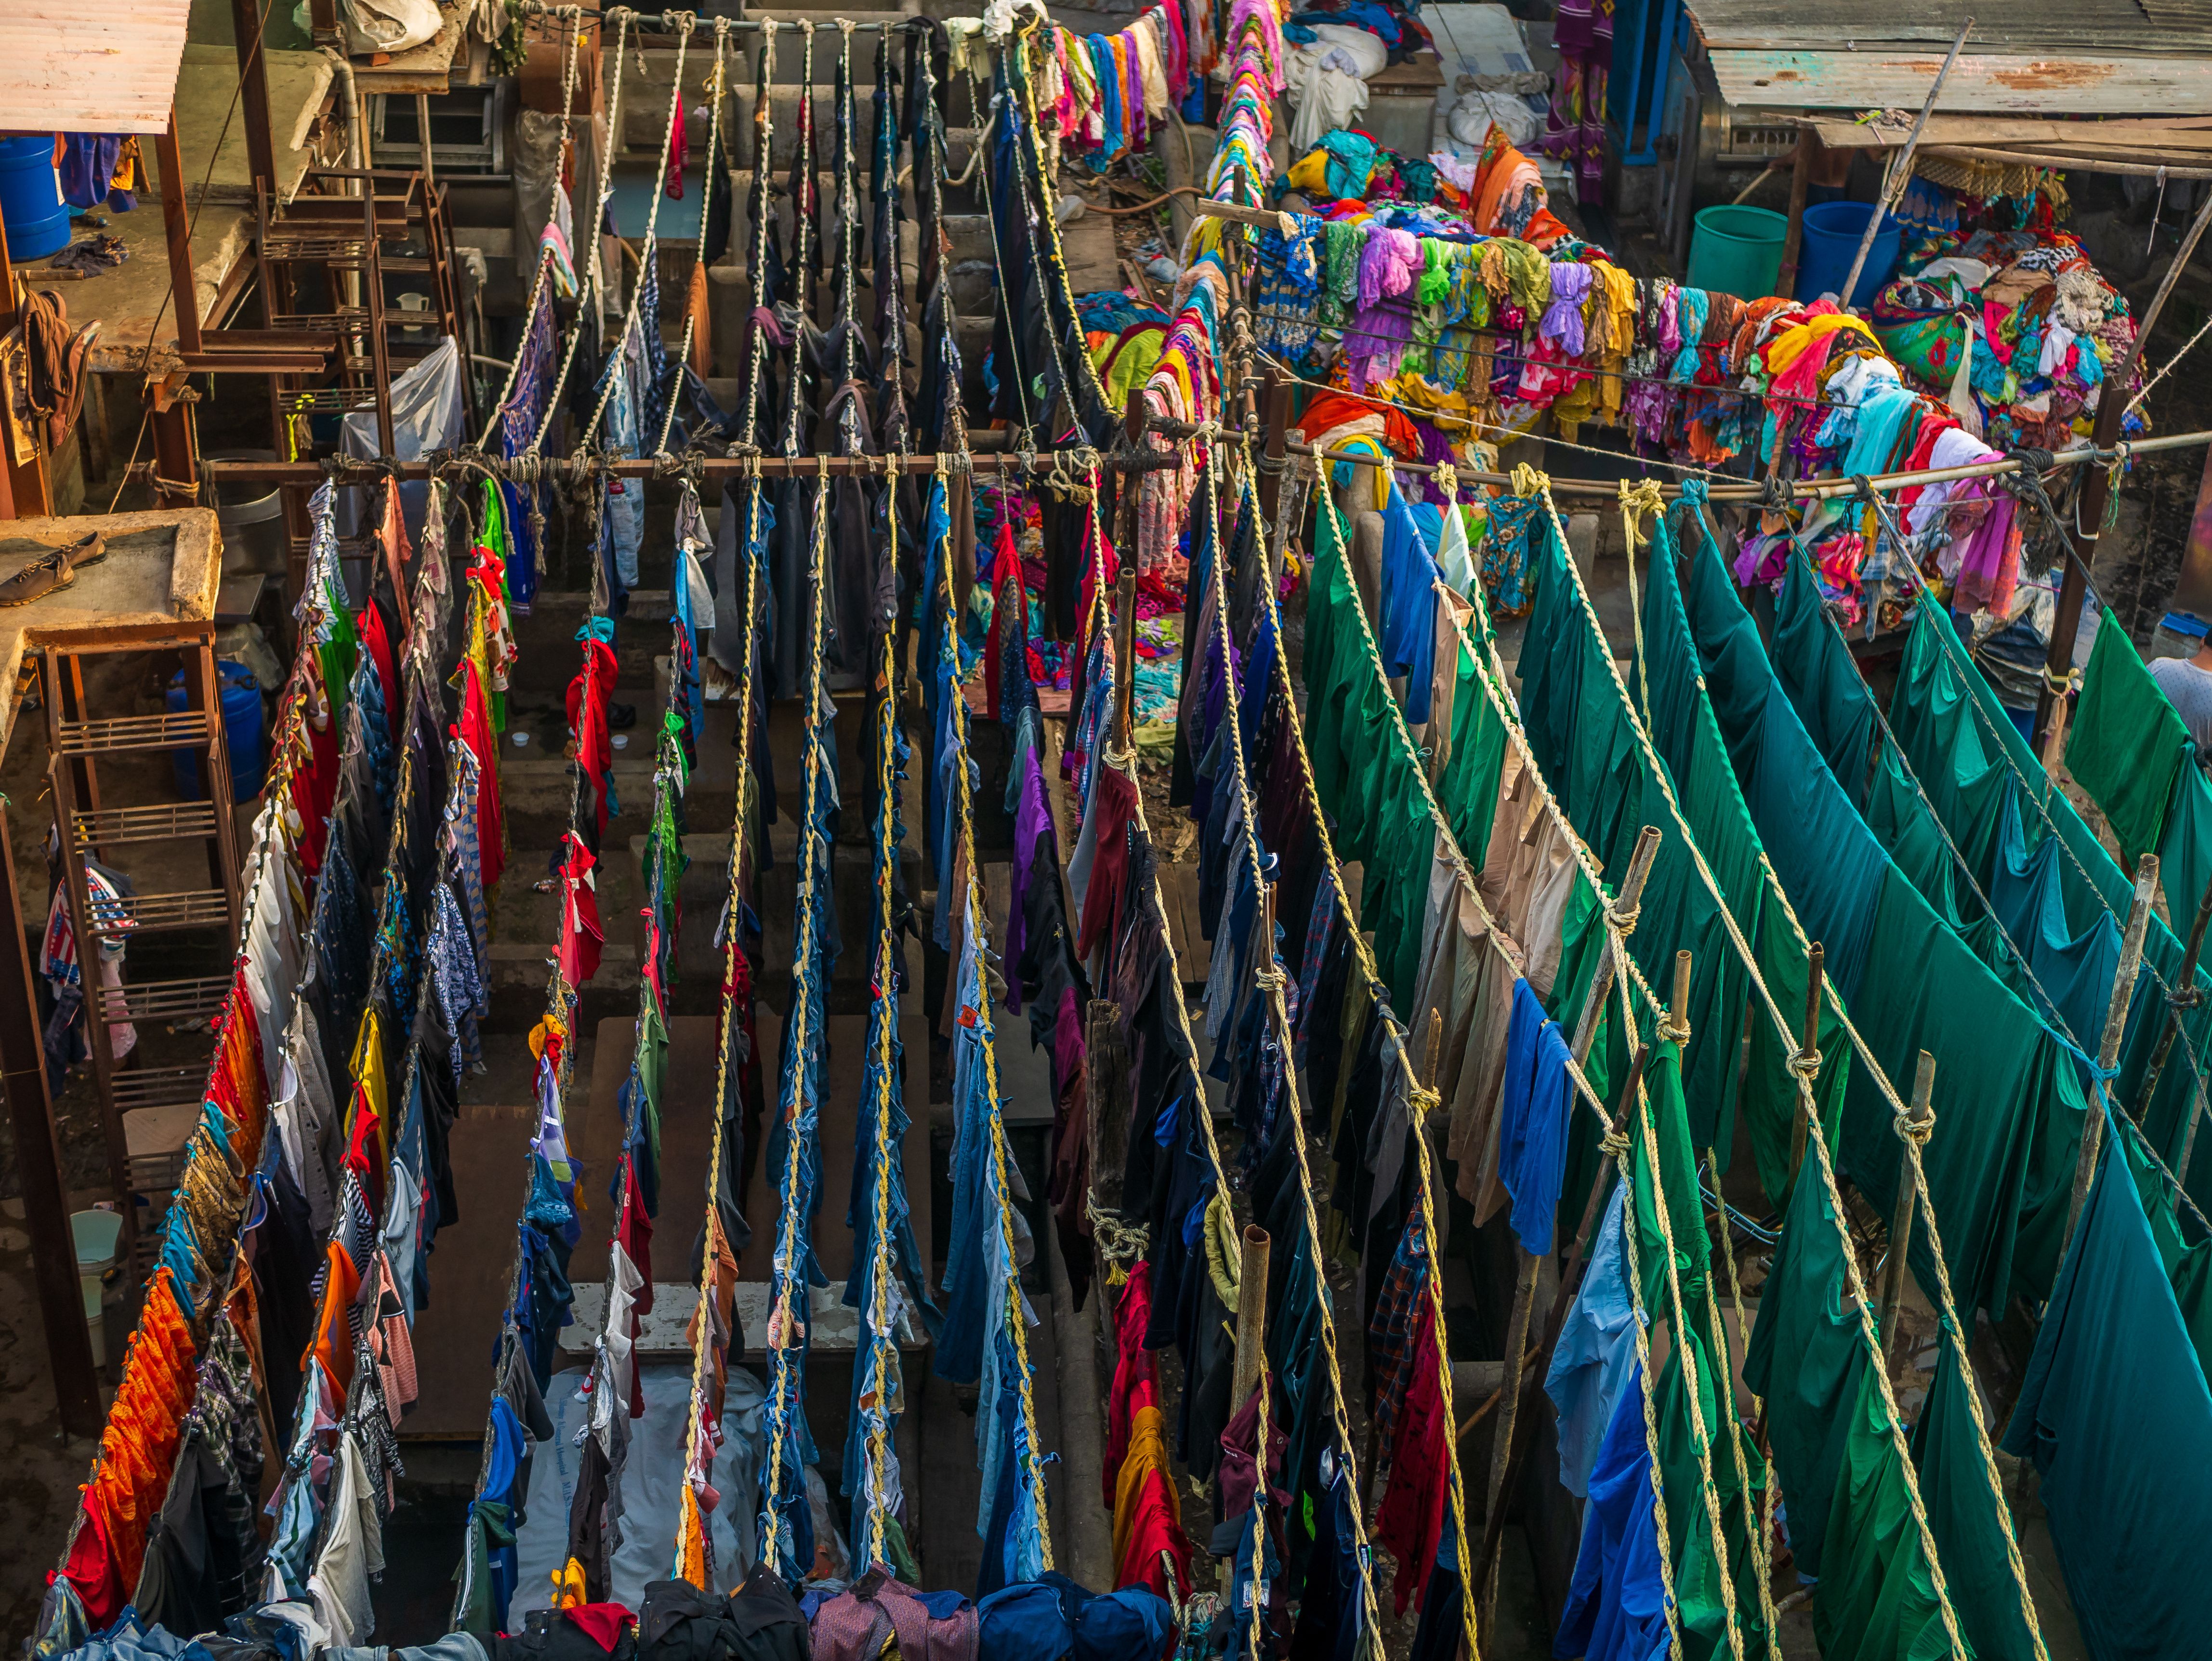 Colorful laundry hanging at the Mahalaxmi Dhobi Ghat